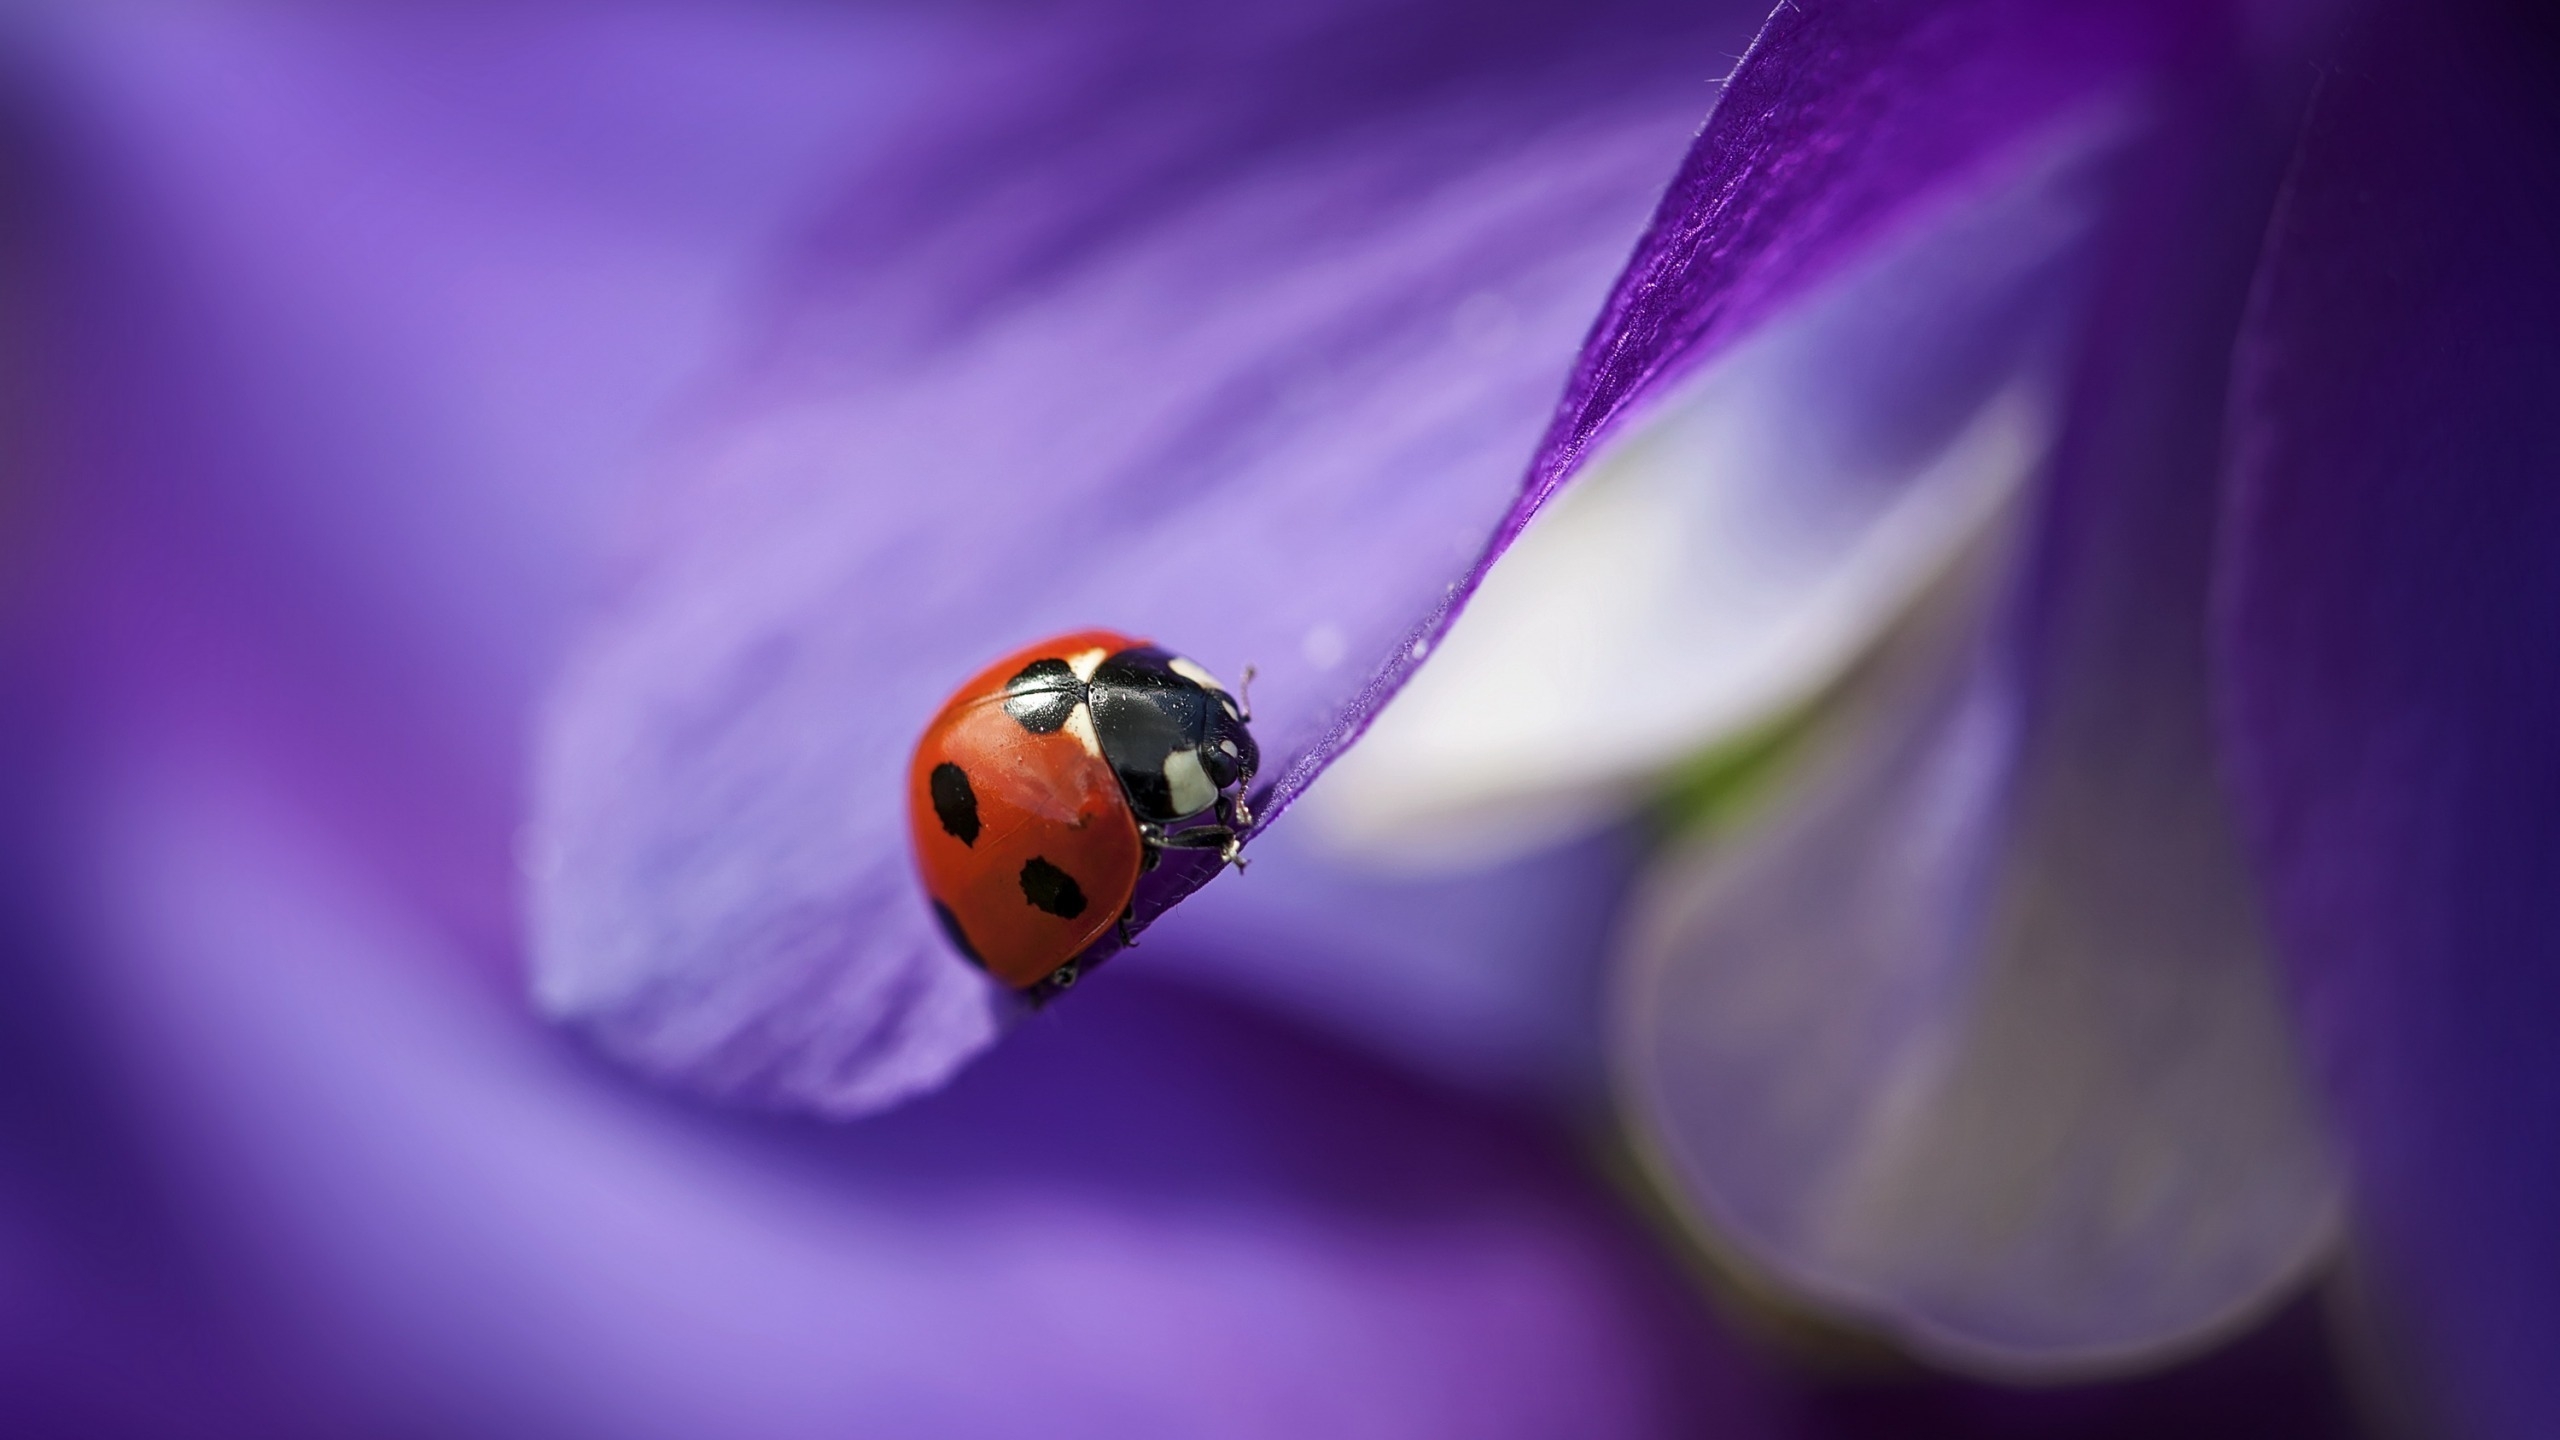 Ladybug on Purple Petal for 2560x1440 HDTV resolution